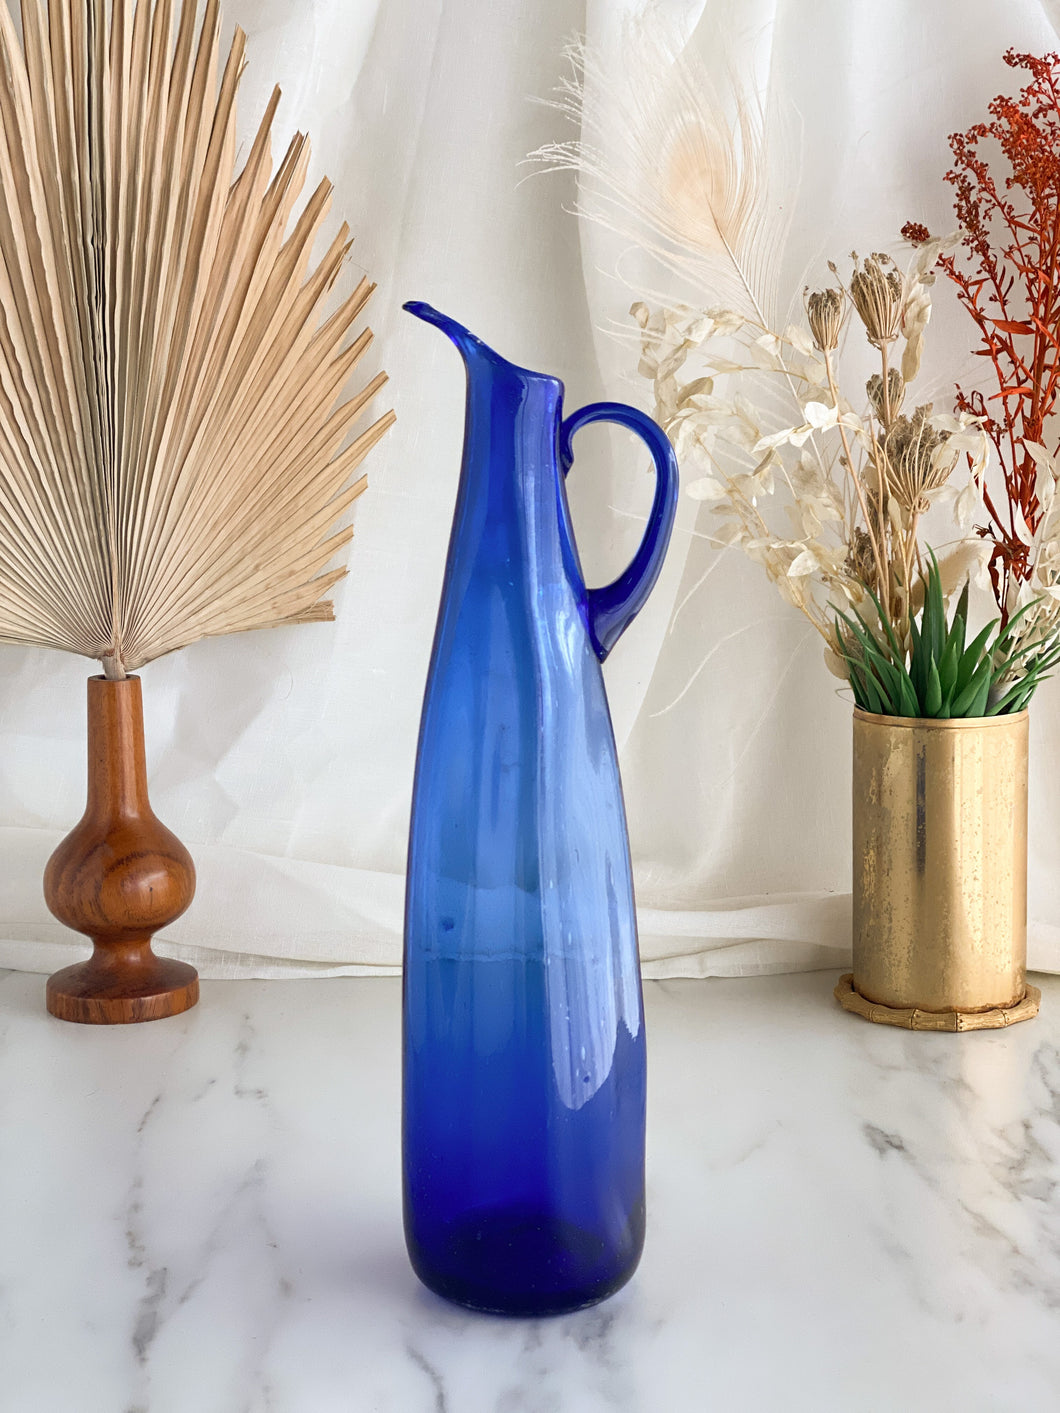 Blue Glass Vase Pitcher